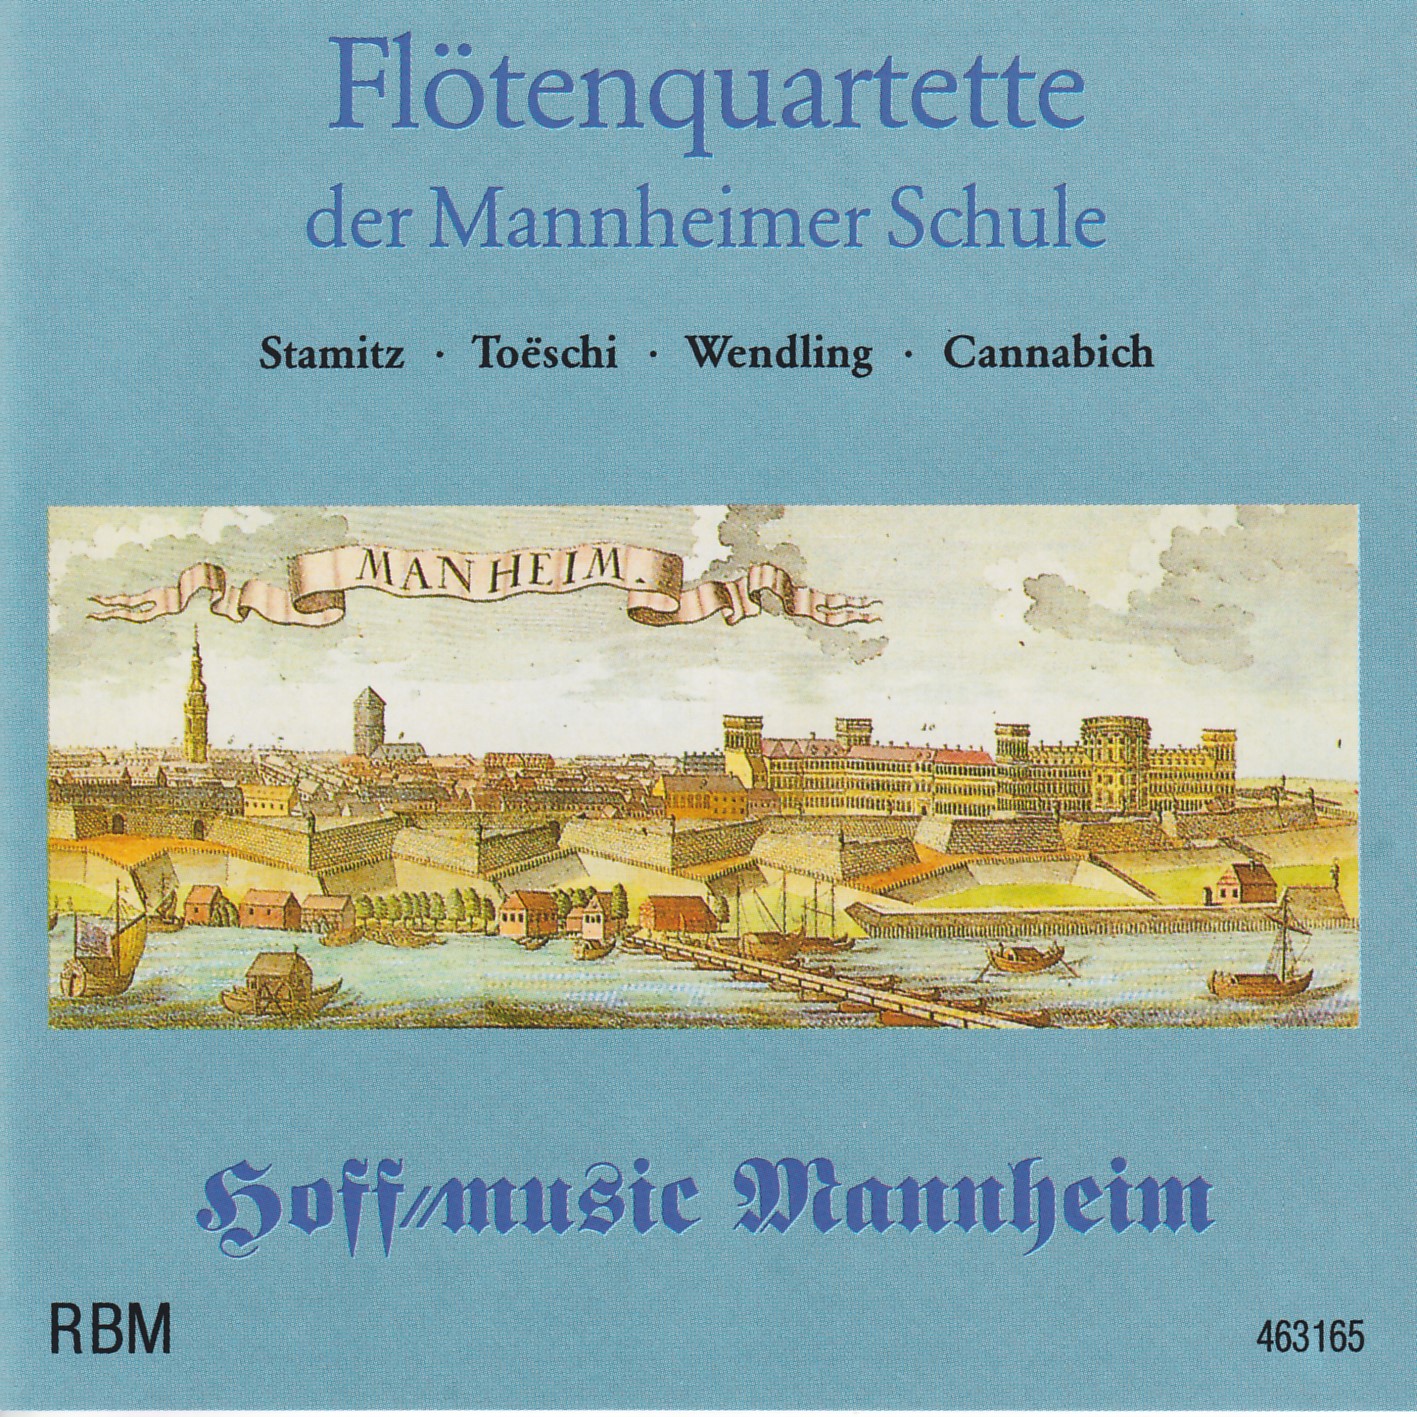 Flötenquartette der Mannheimer Schule